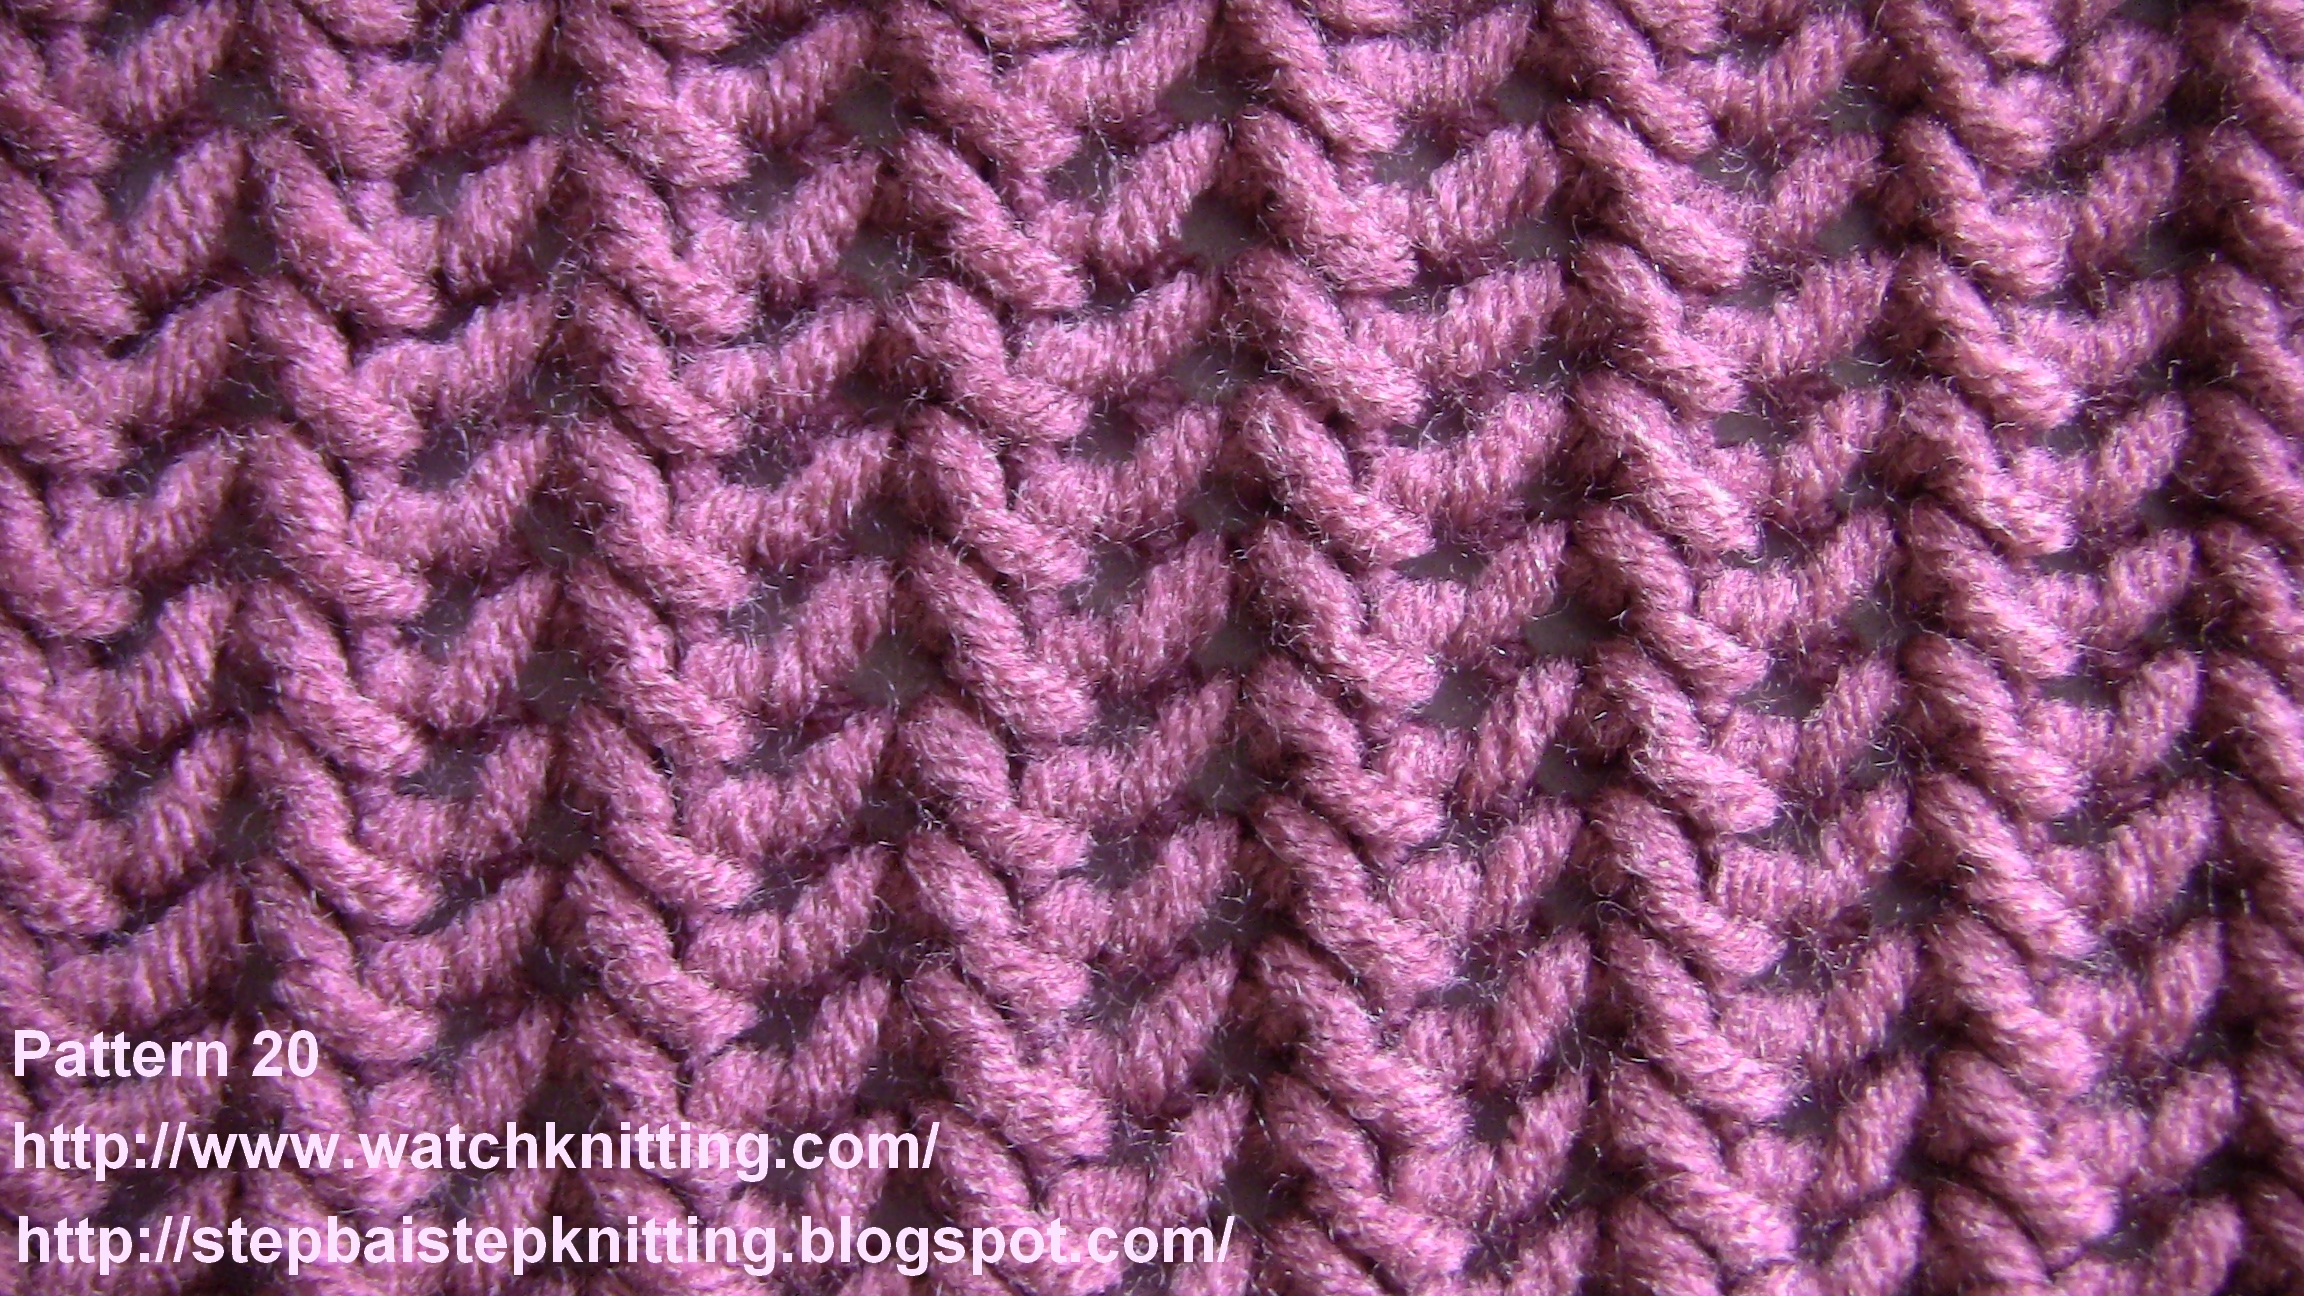 Video: Beginning to Knitting | eHow.com